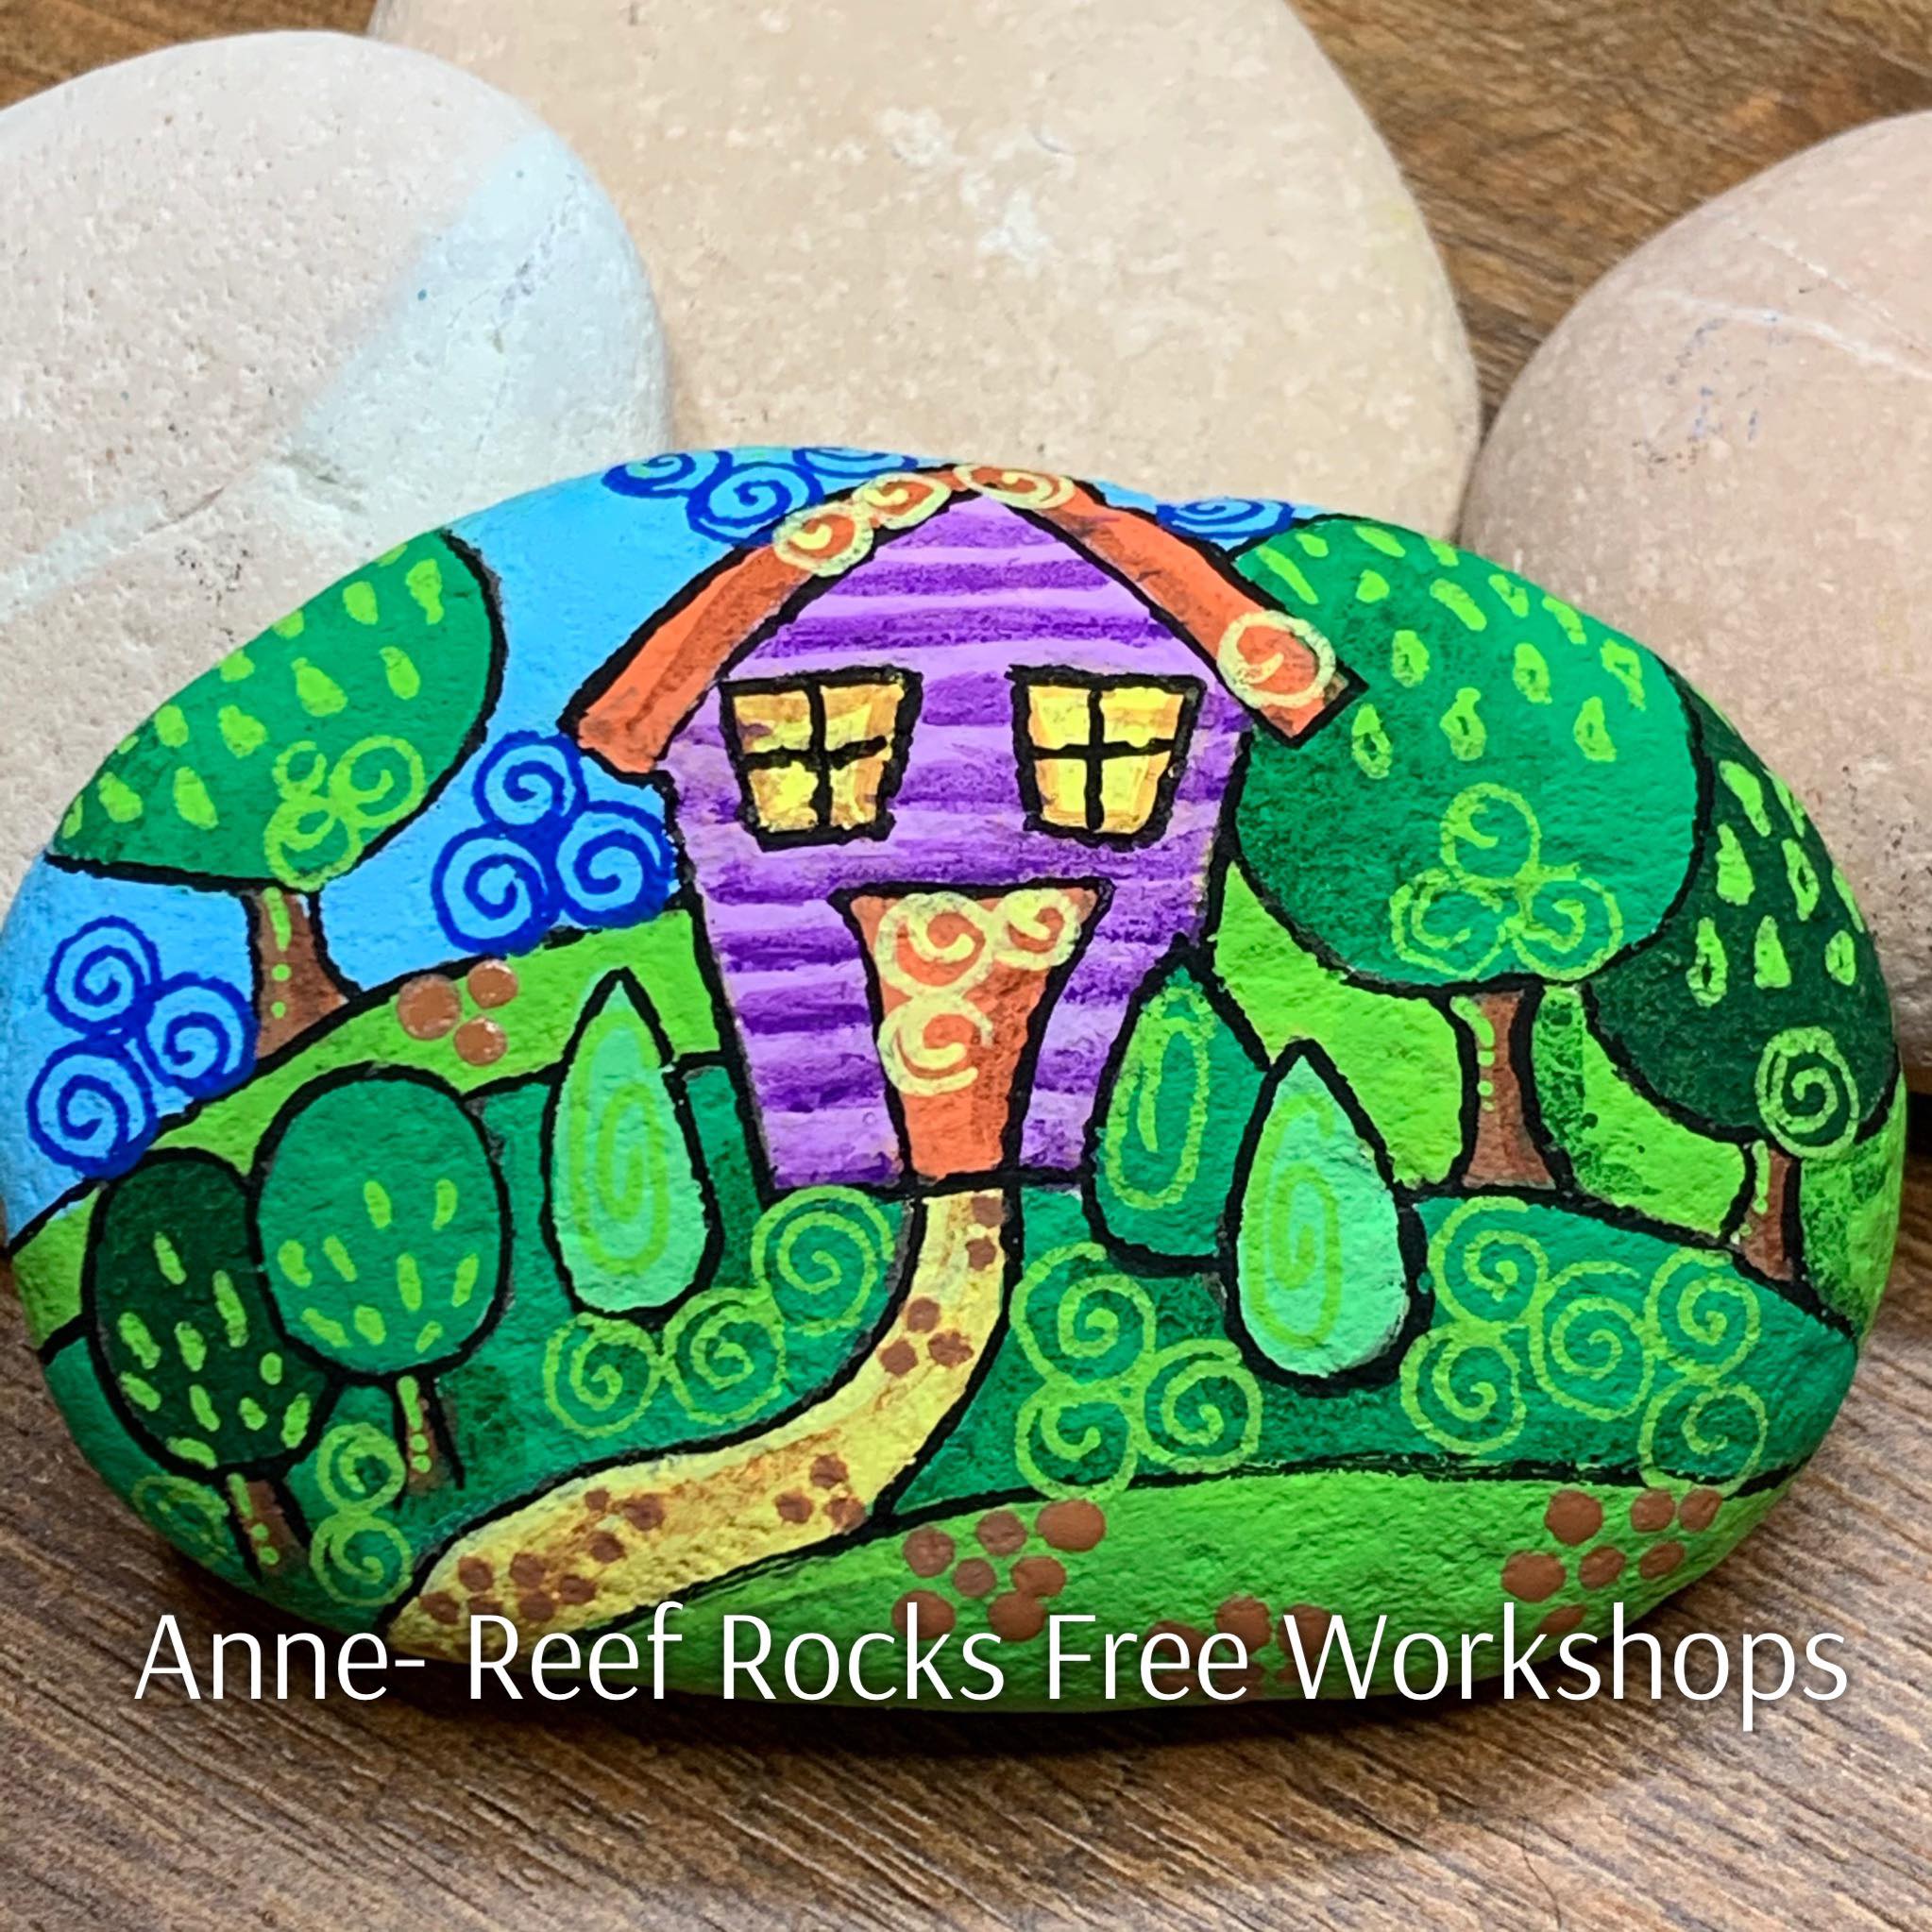 Shop Now  Rock Painting Workshops